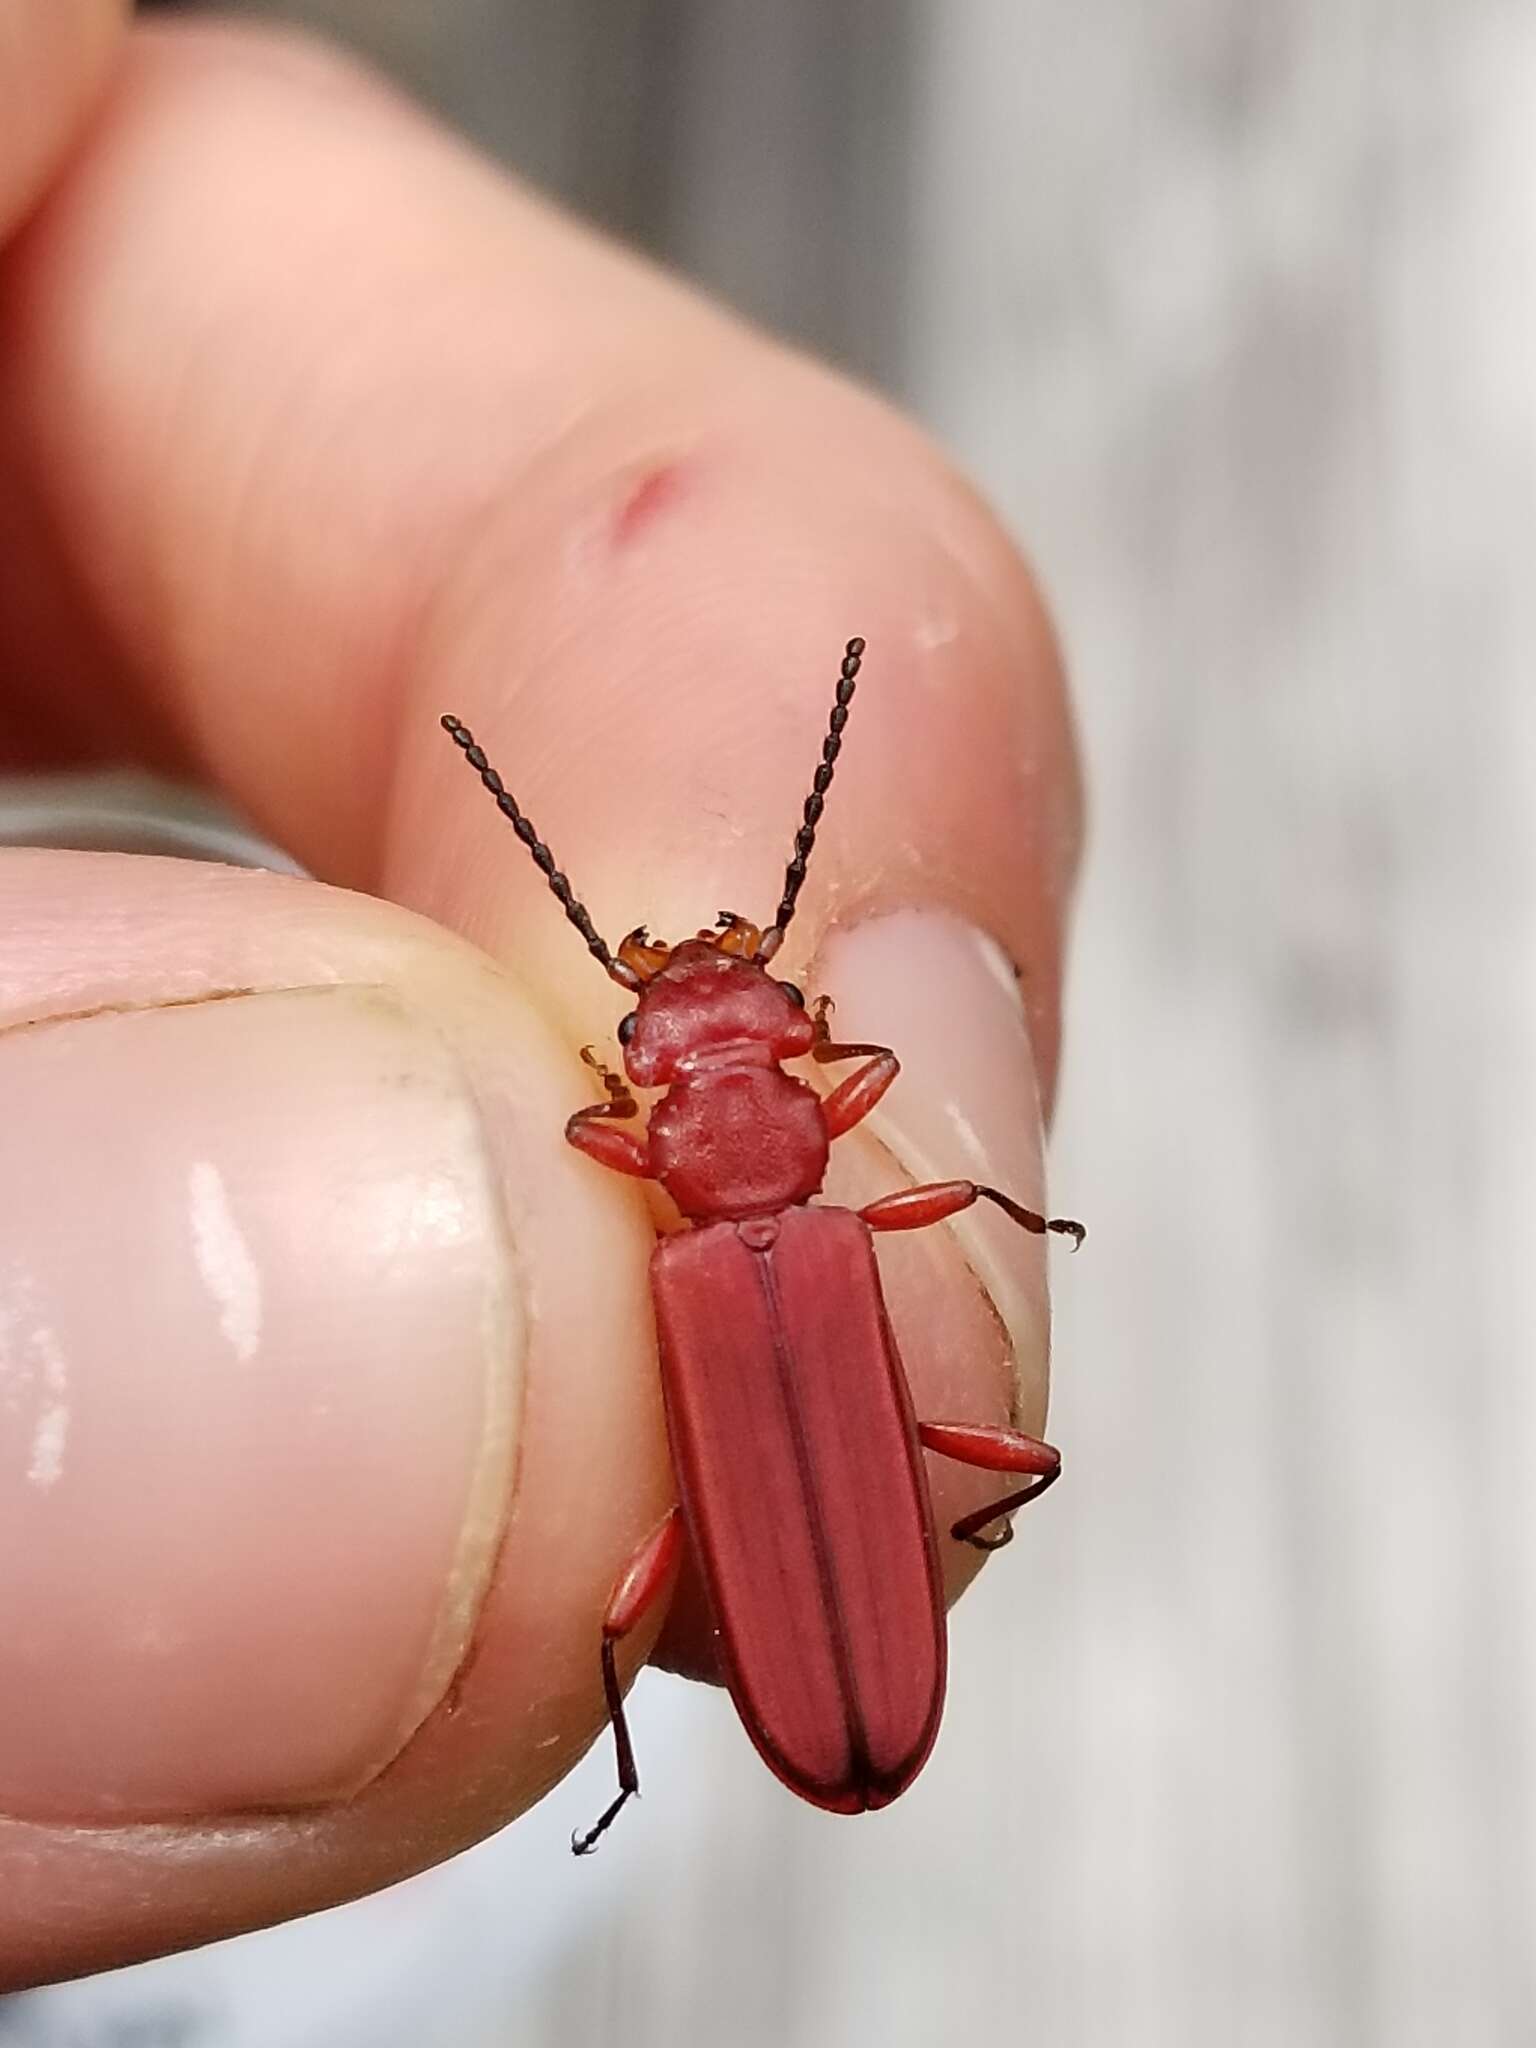 Image of Red Flat Bark Beetle